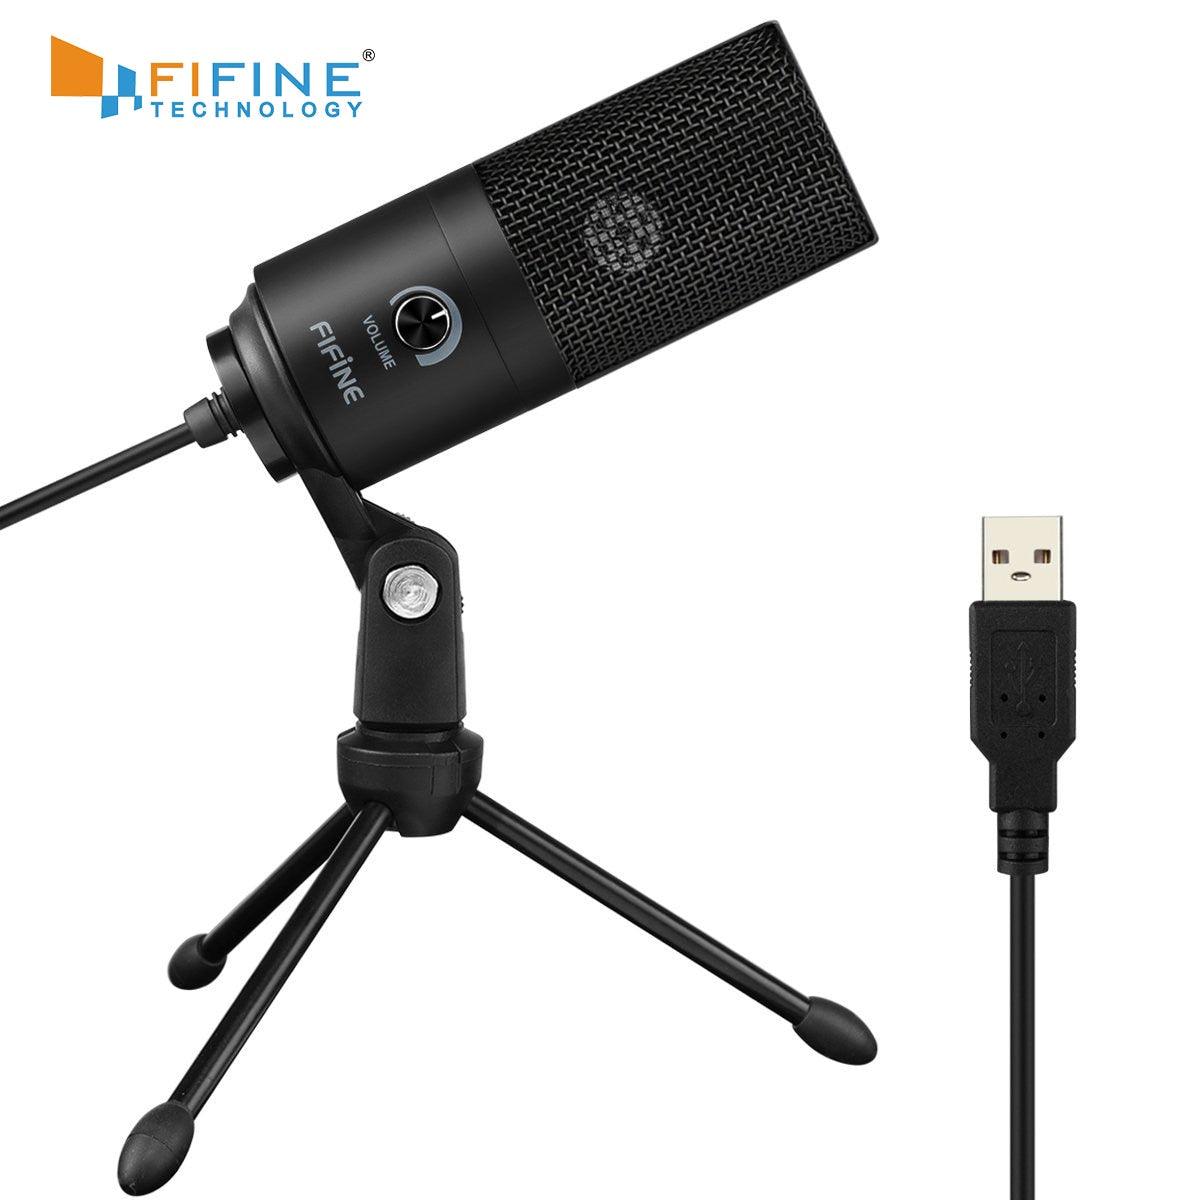 Fifine Metal USB Condenser Recording Microphone For Laptop Windows Cardioid Studio Recording Vocals Voice Over,Video-K669 - YOURISHOP.COM